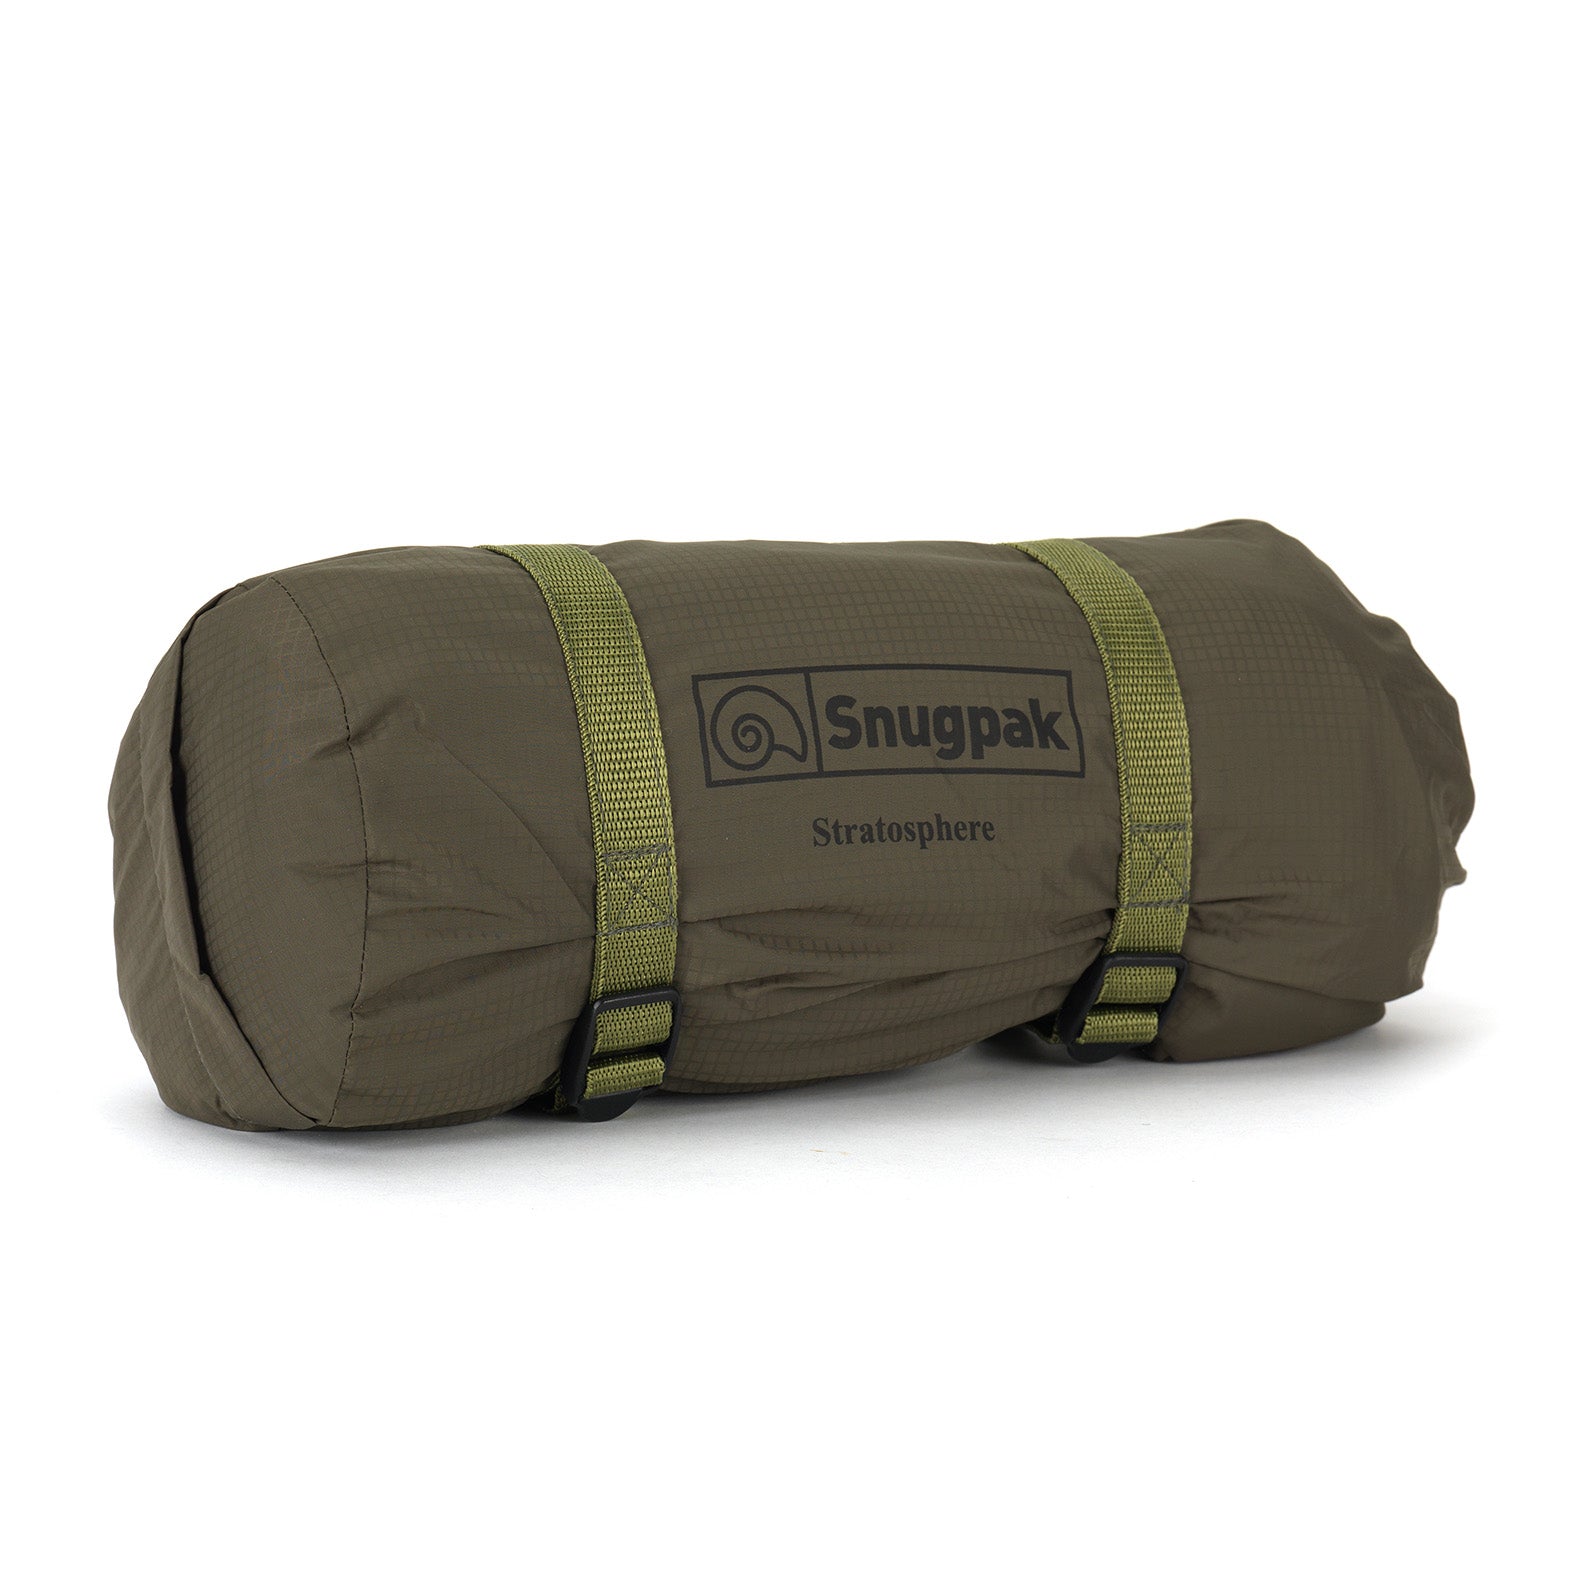 Snugpak Stratosphere 1 Person Waterproof Bivvi Shelter